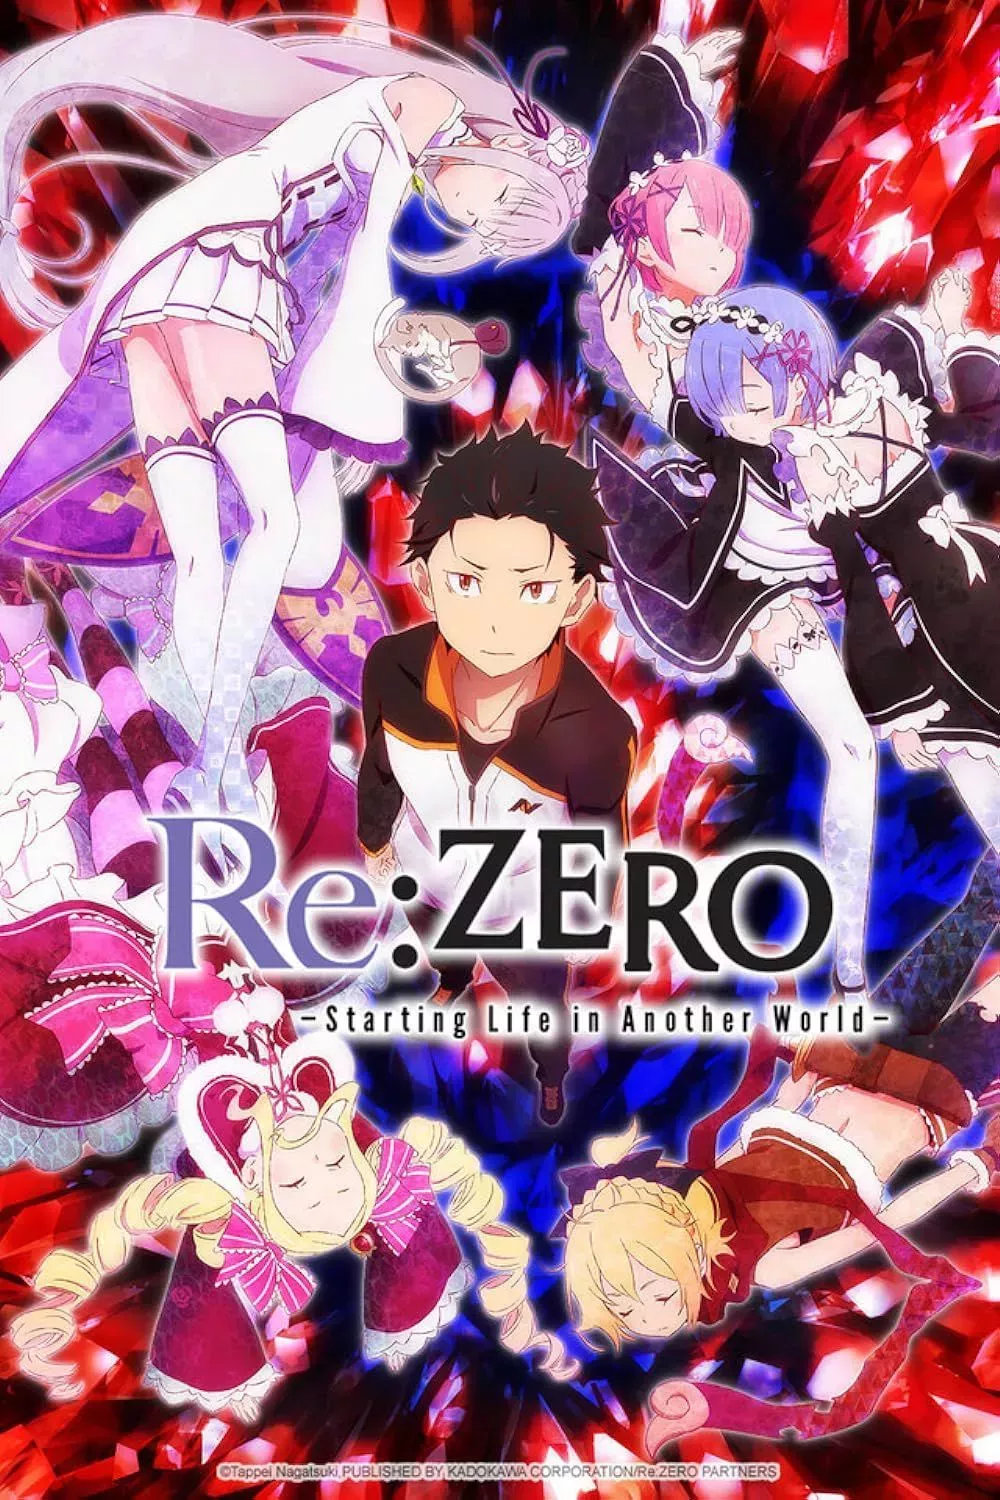 Subaru and the Re:Zero Cast on the Anime Promo